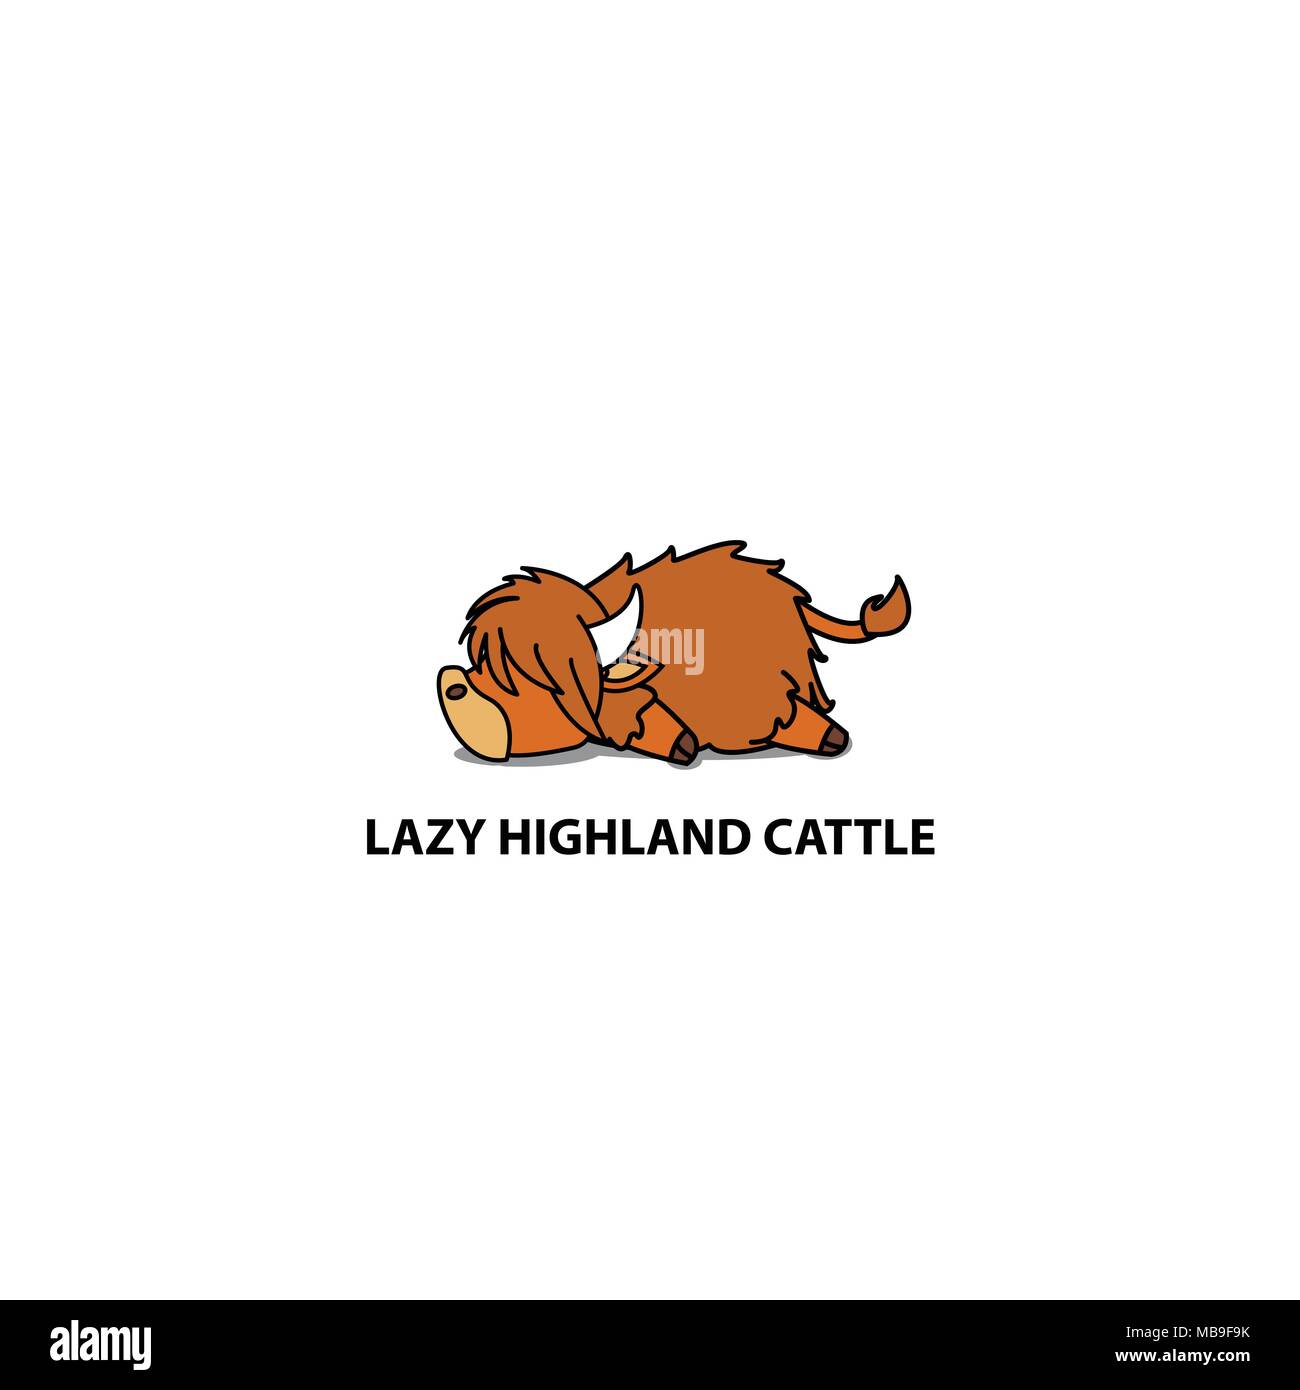 Lazy highland cattle icon, logo design, vector illustration Stock Vector